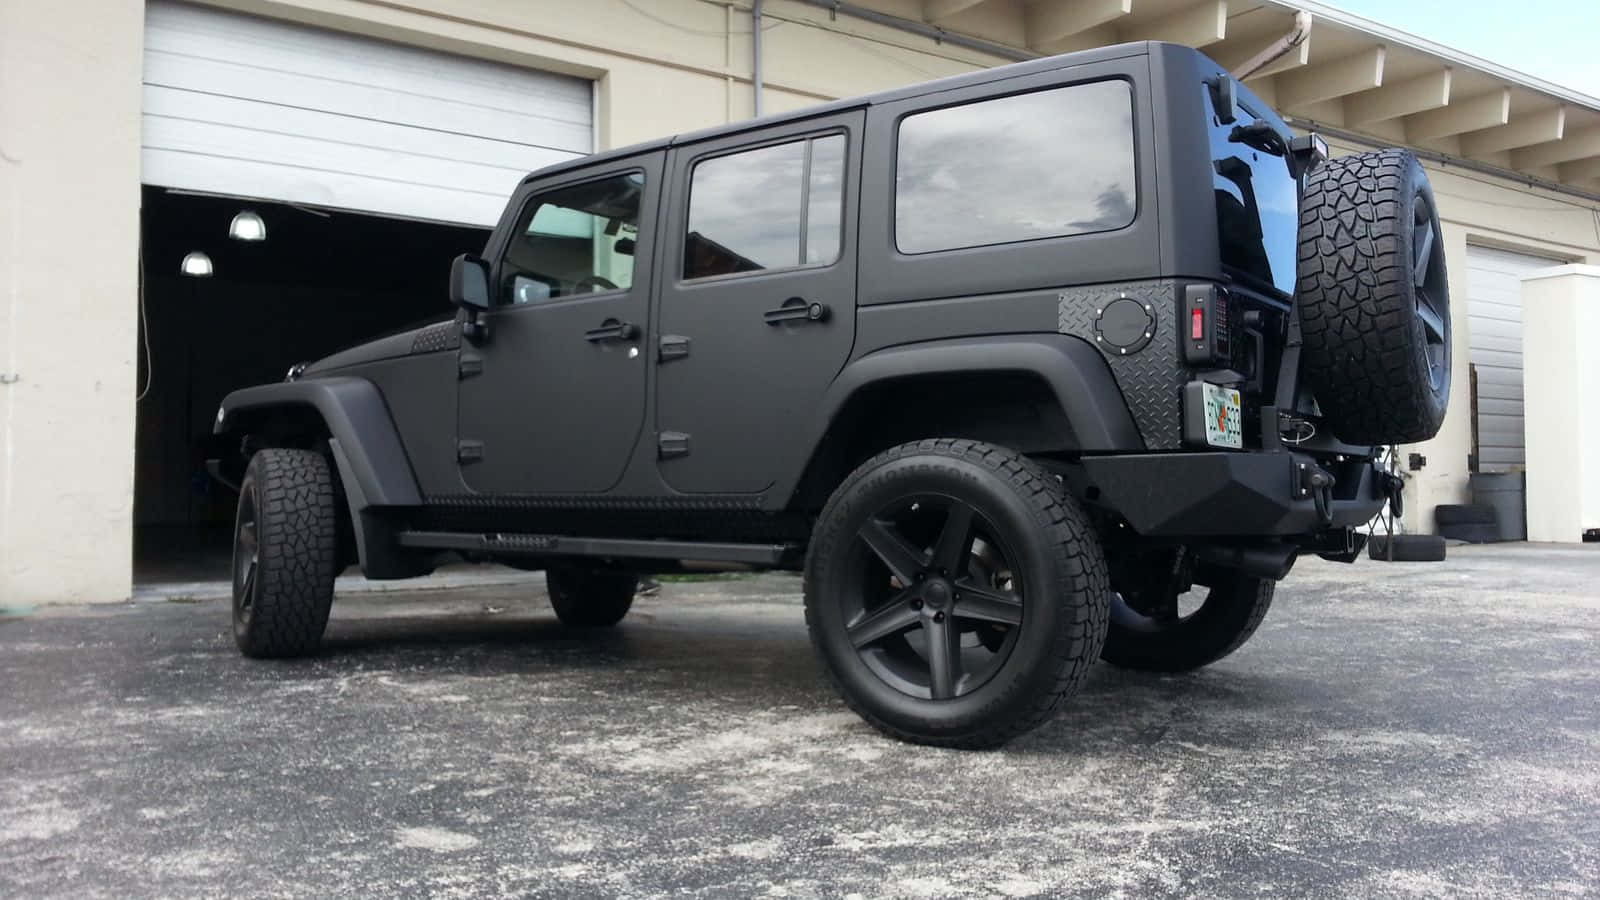 A sleek black Jeep looks ready for a mountain adventure.